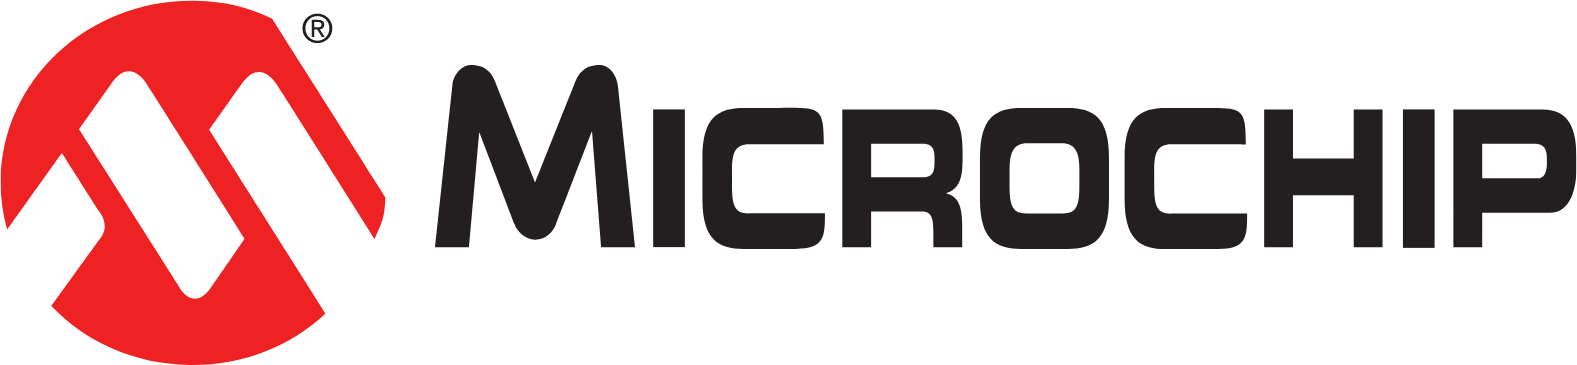 Microchip Technology logo large (transparent PNG)